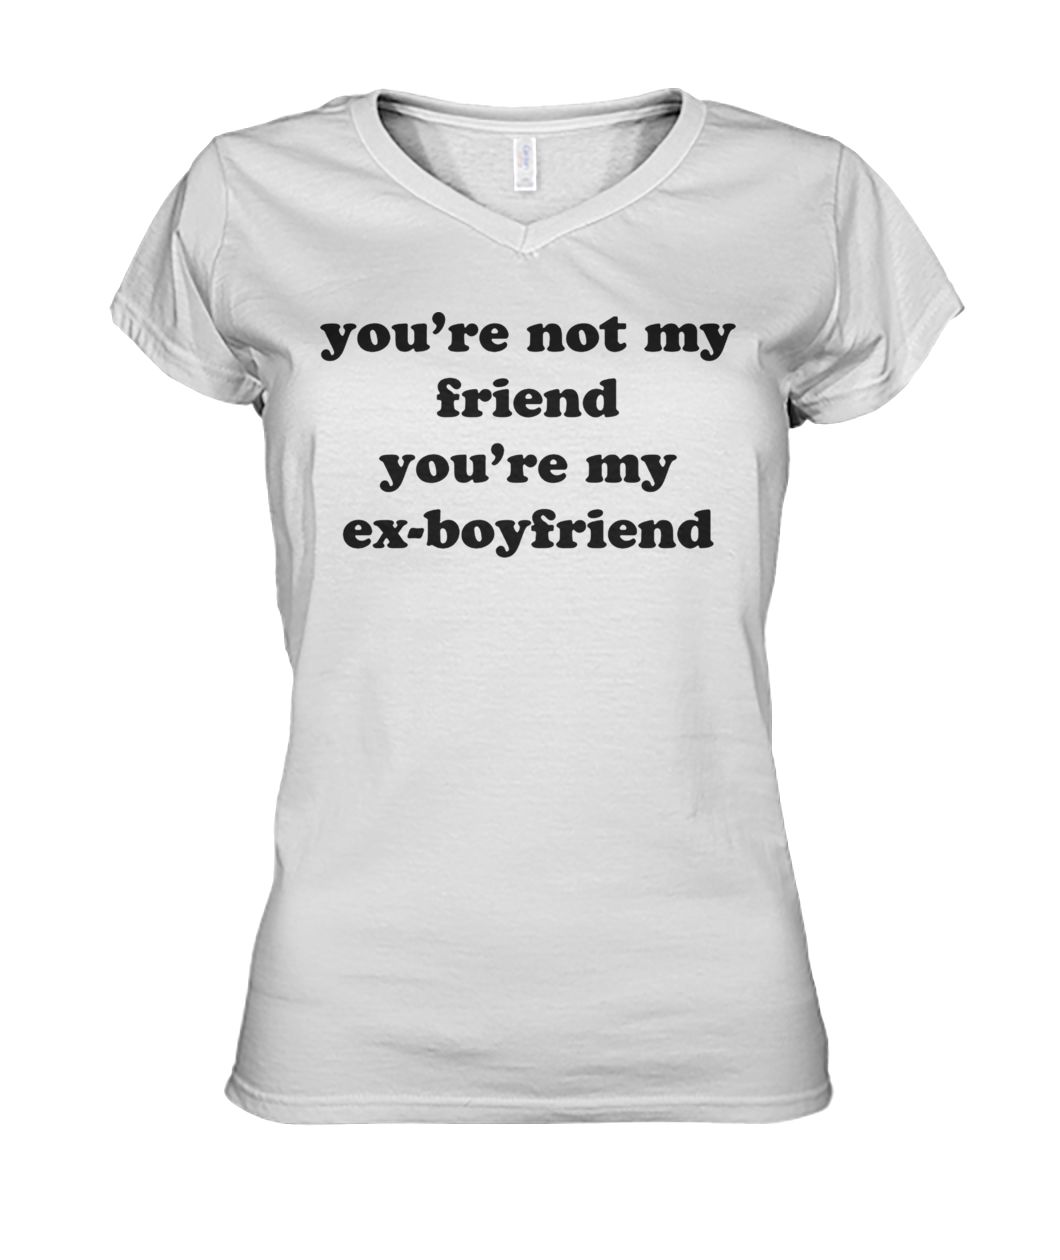 You're not my friend you're my ex-boyfriend women's v-neck